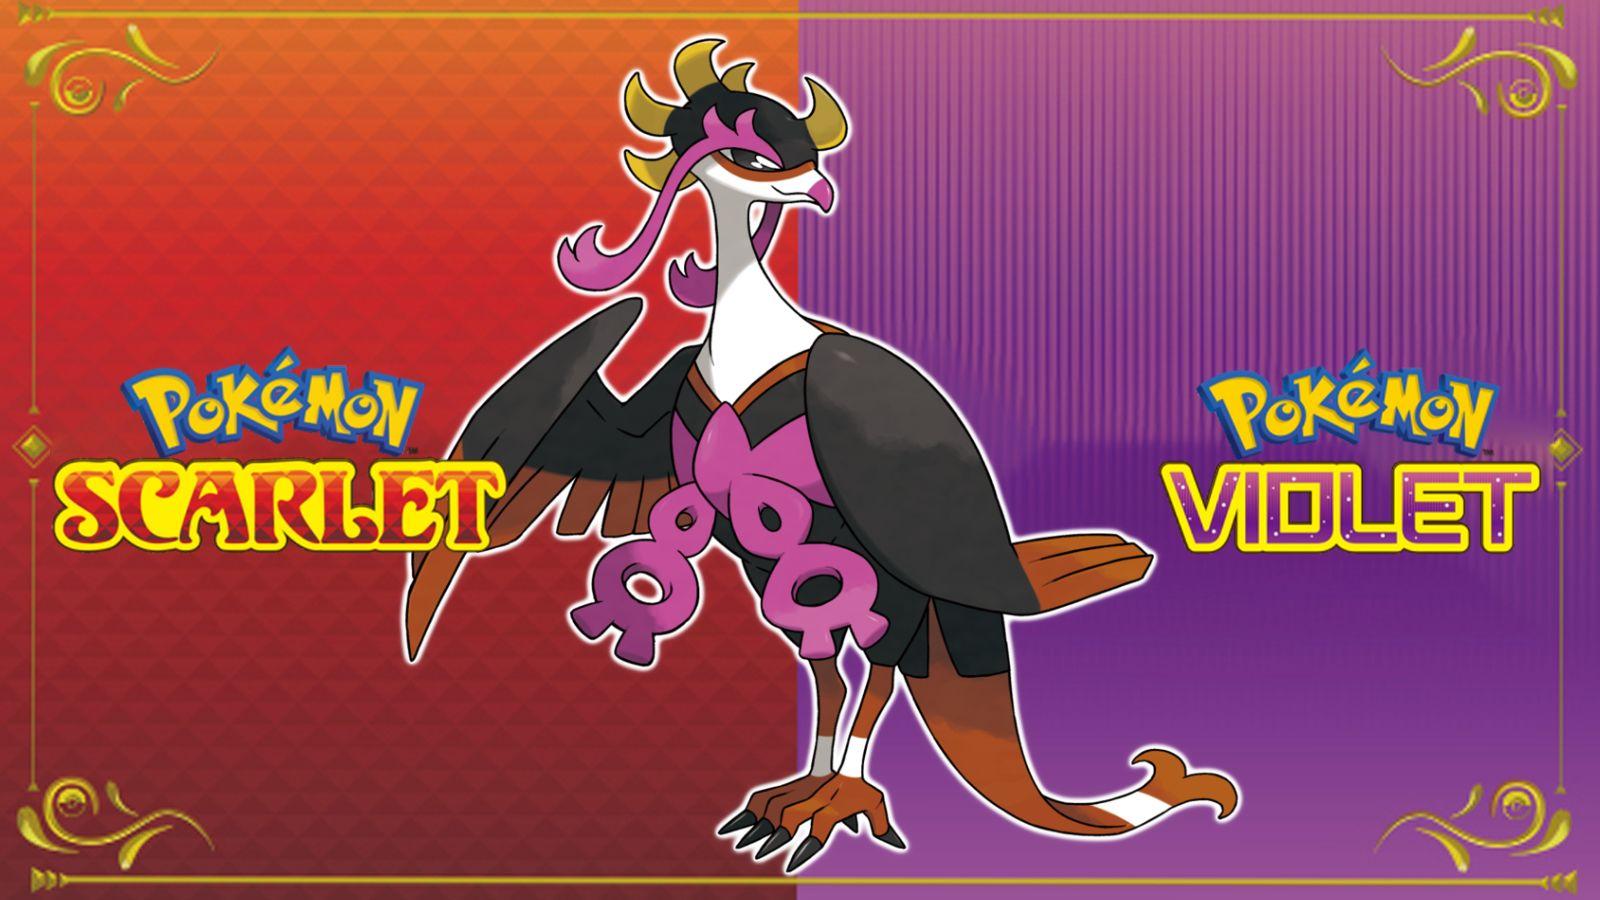 POKEDEX LEAK! NEW FISH and PARAKEET for Pokemon Scarlet and Violet Update :  r/PromoteGamingVideos